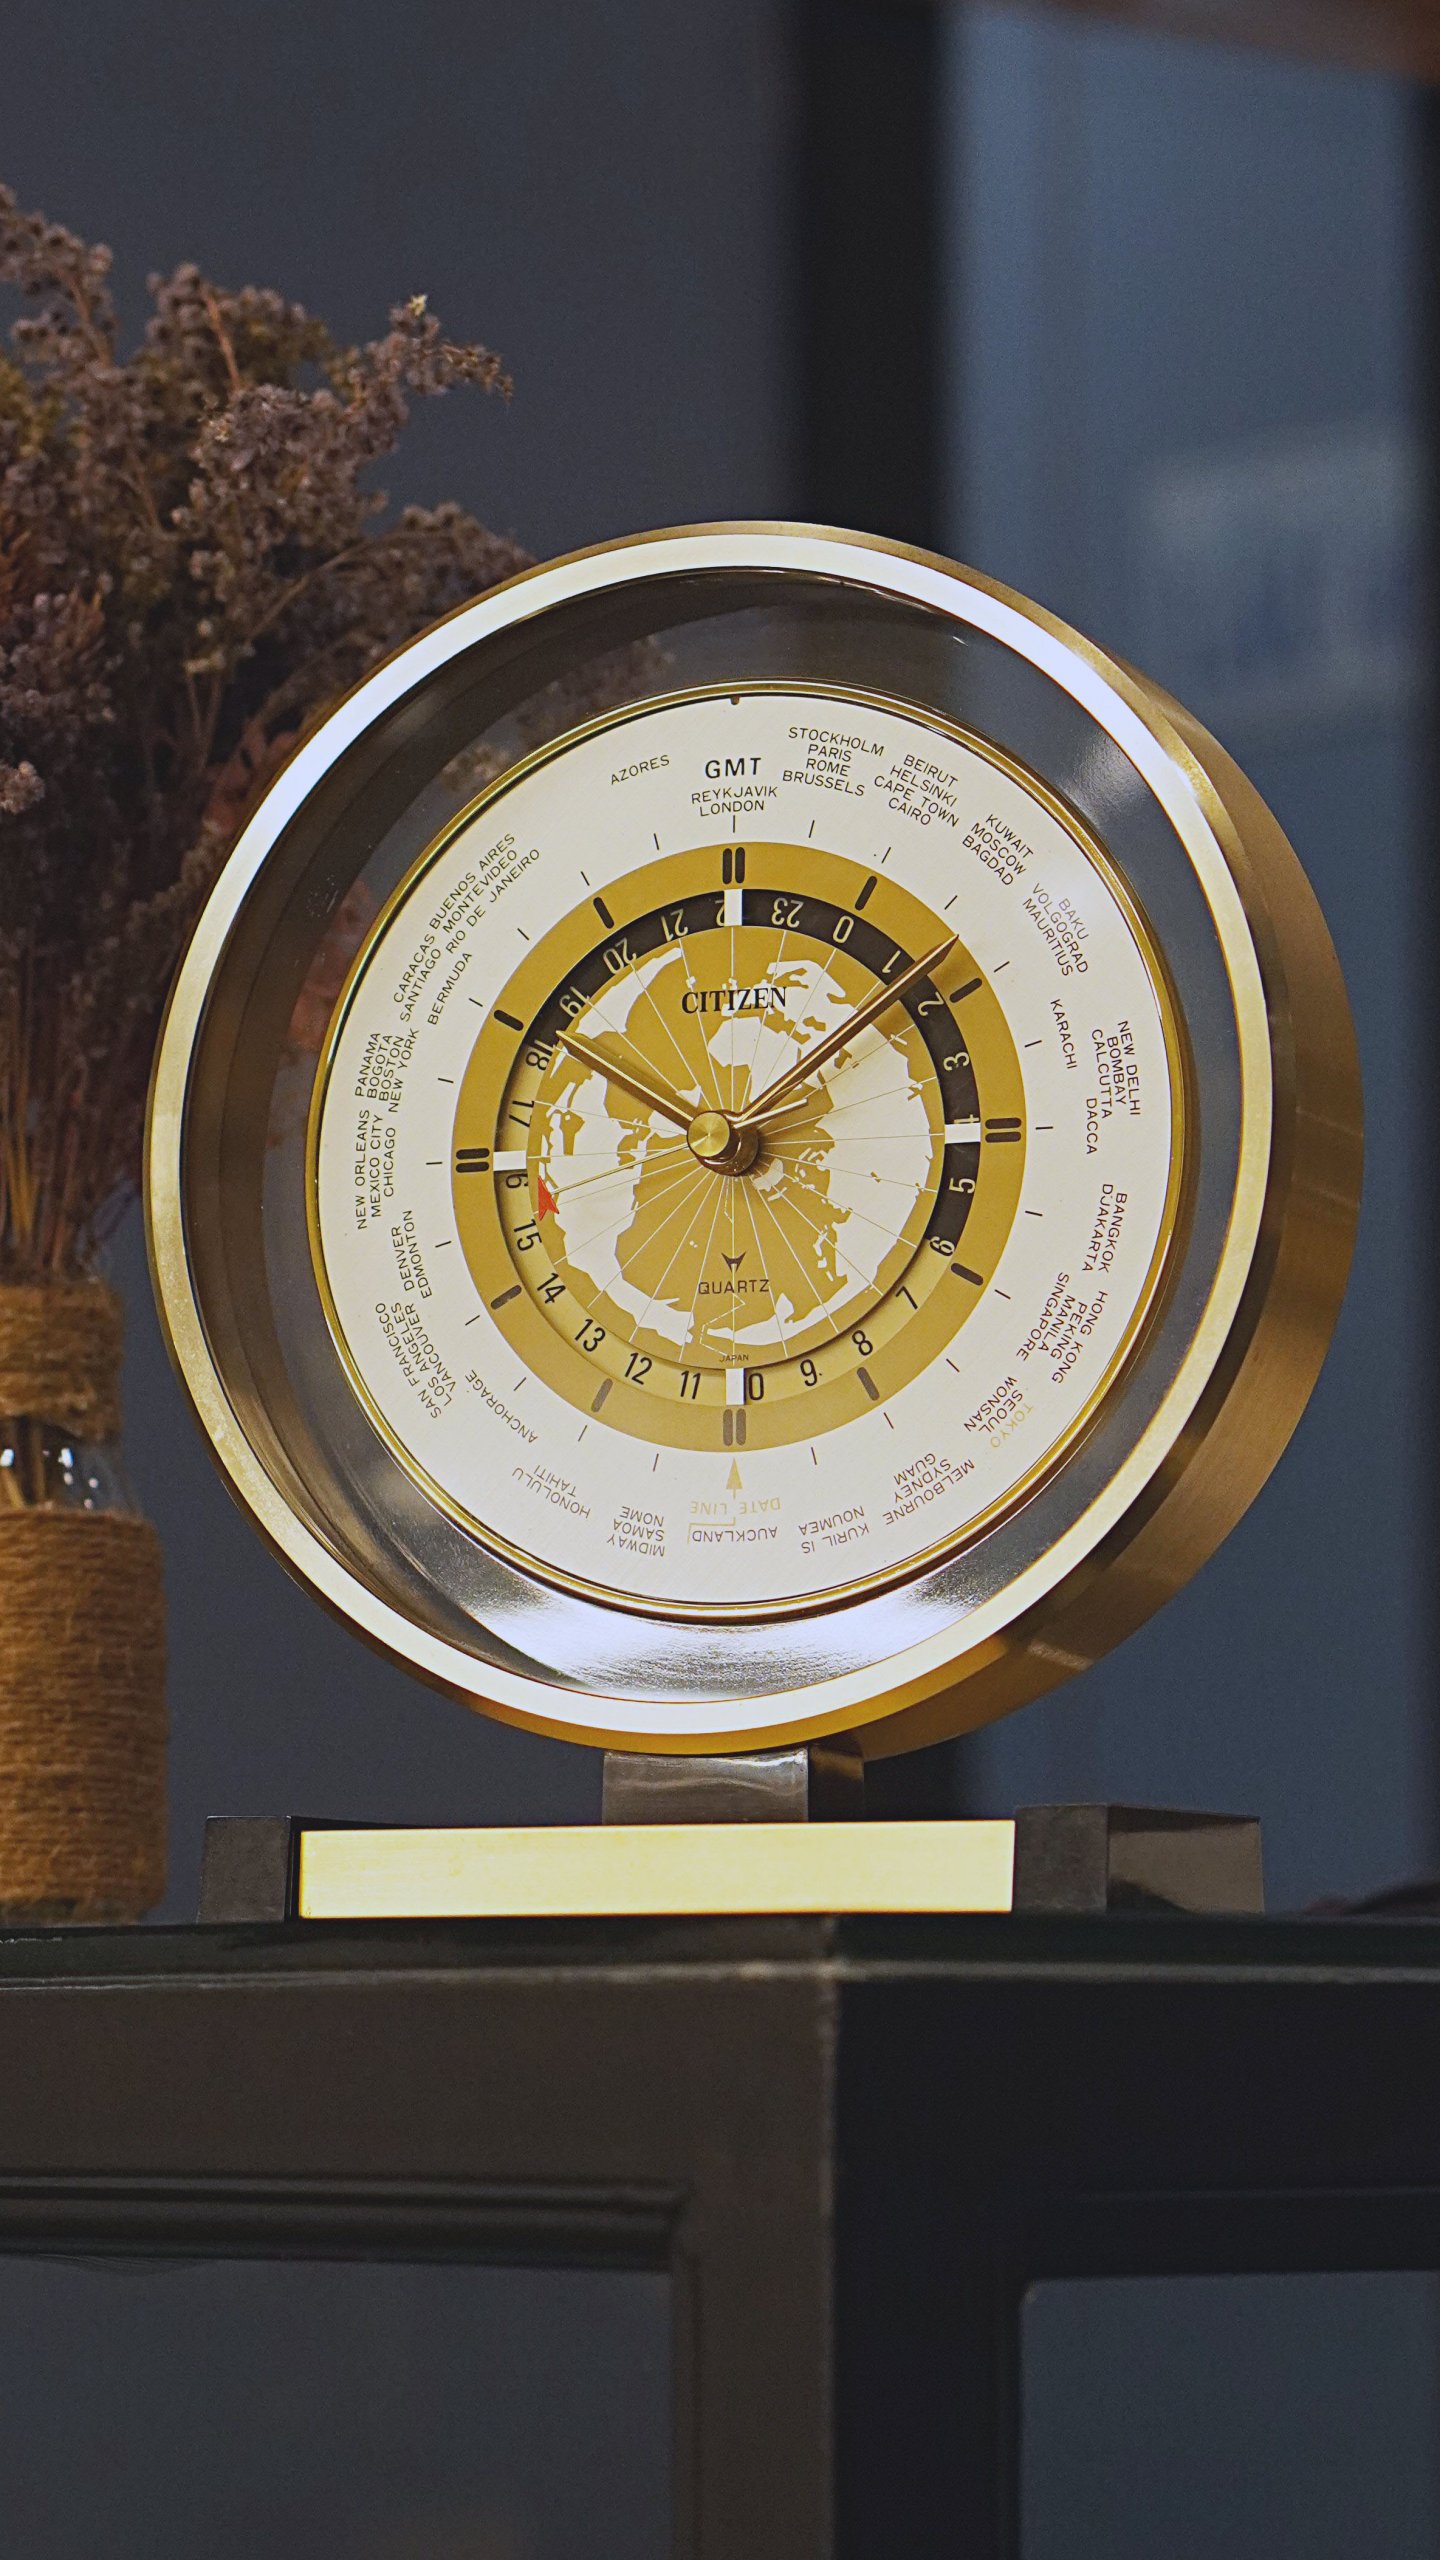 CITIZEN World Time Table Clock - Vintage 4 Life